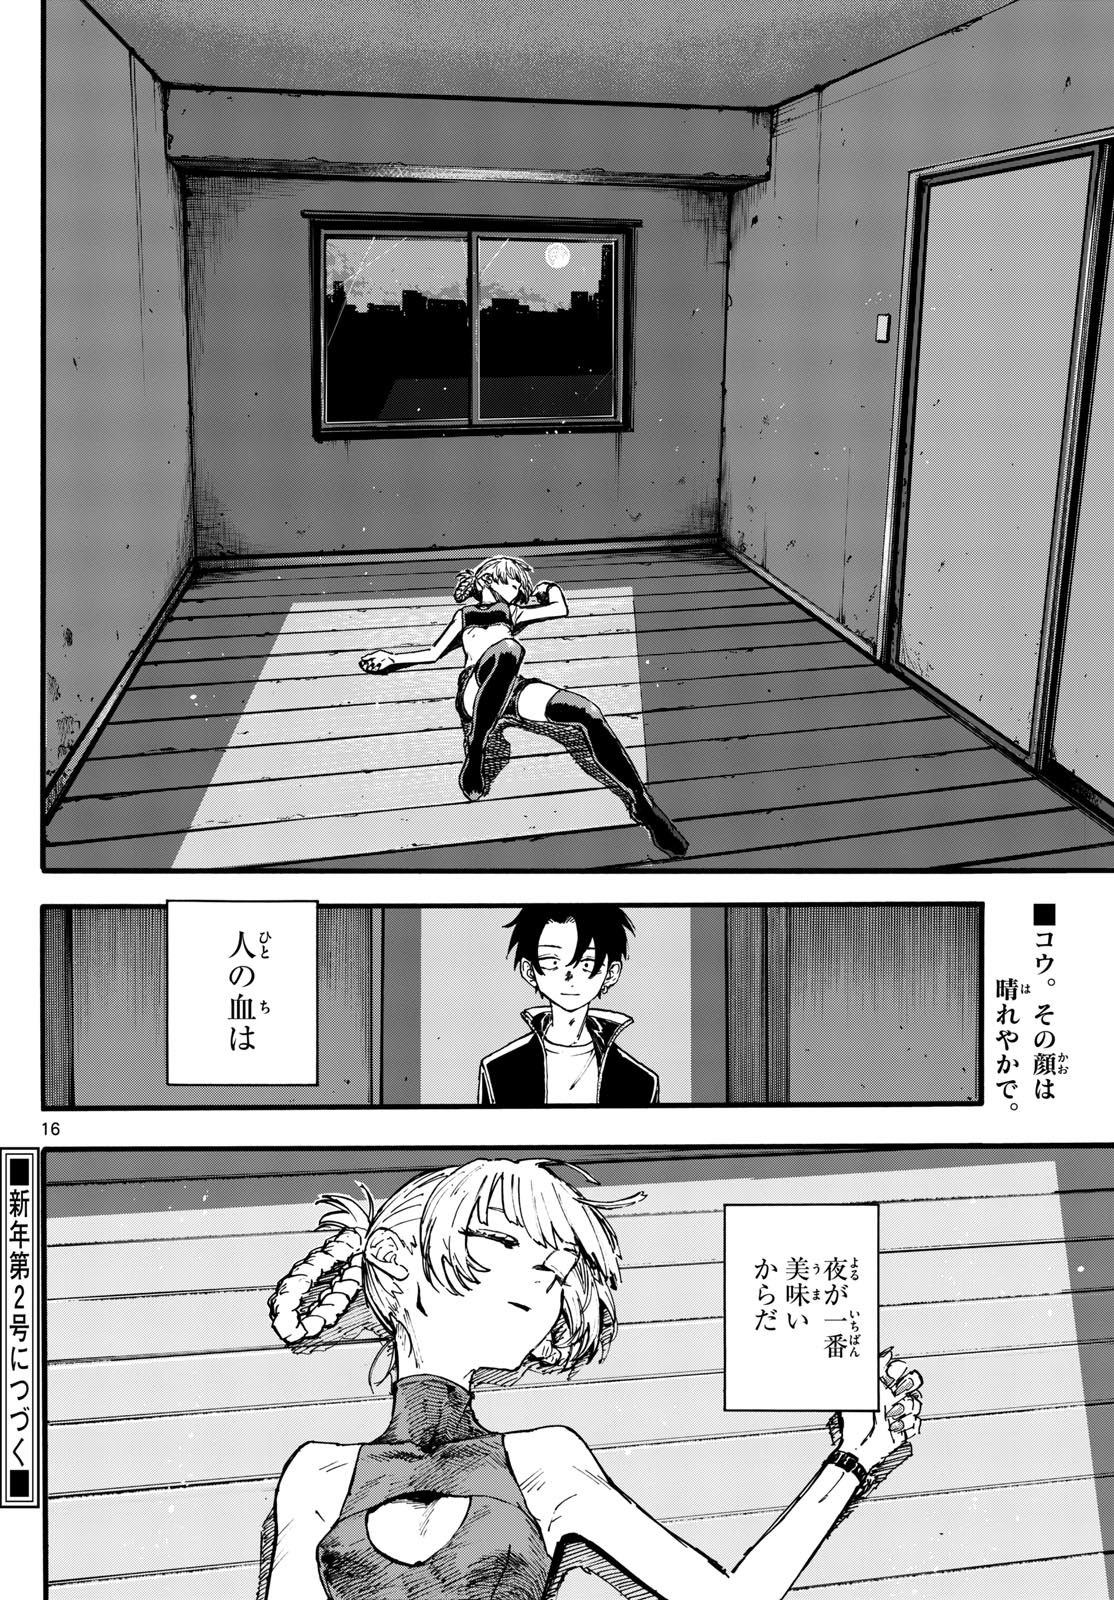 Yofukashi no Uta - Chapter 194 - Page 16